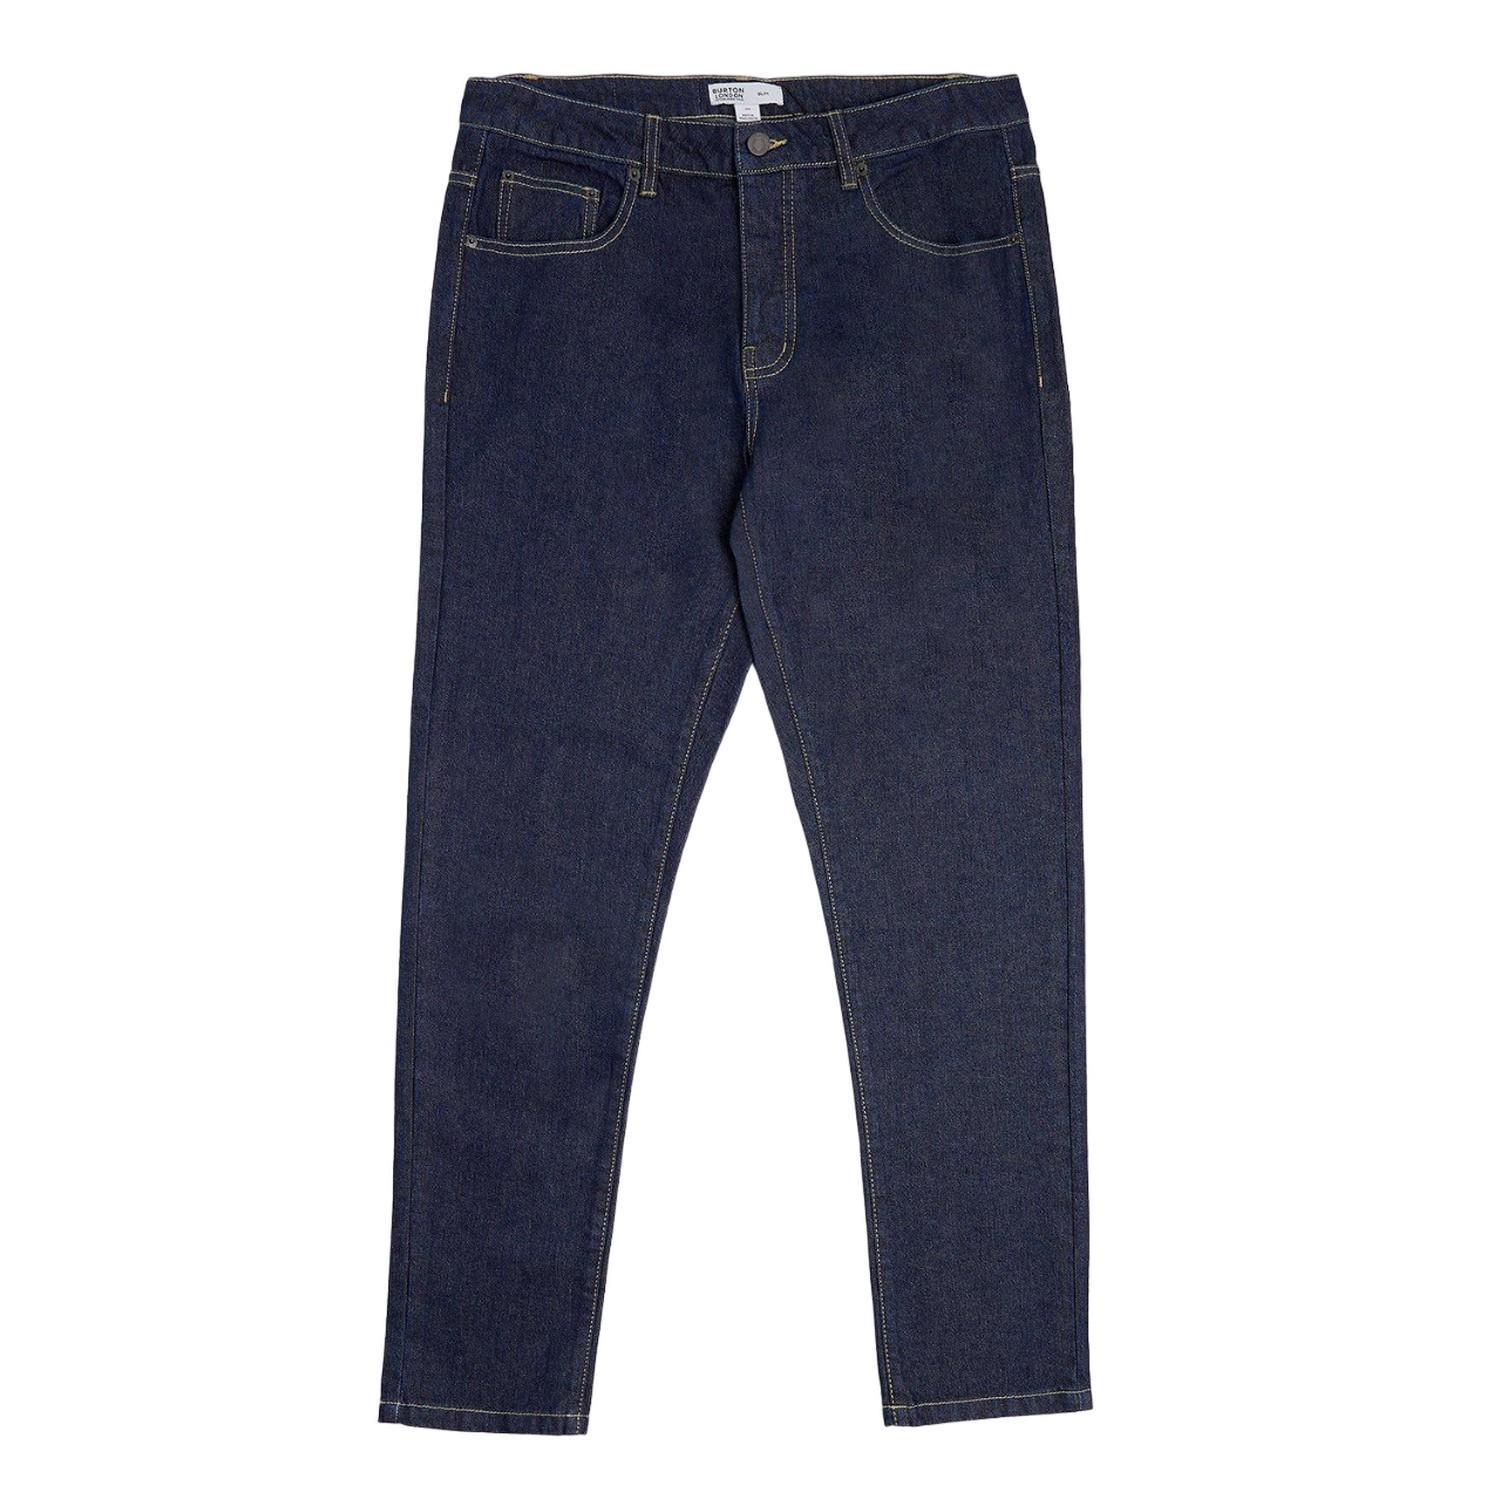 Burton Mens Rinse Slim Jeans (Dark Blue) (30R)